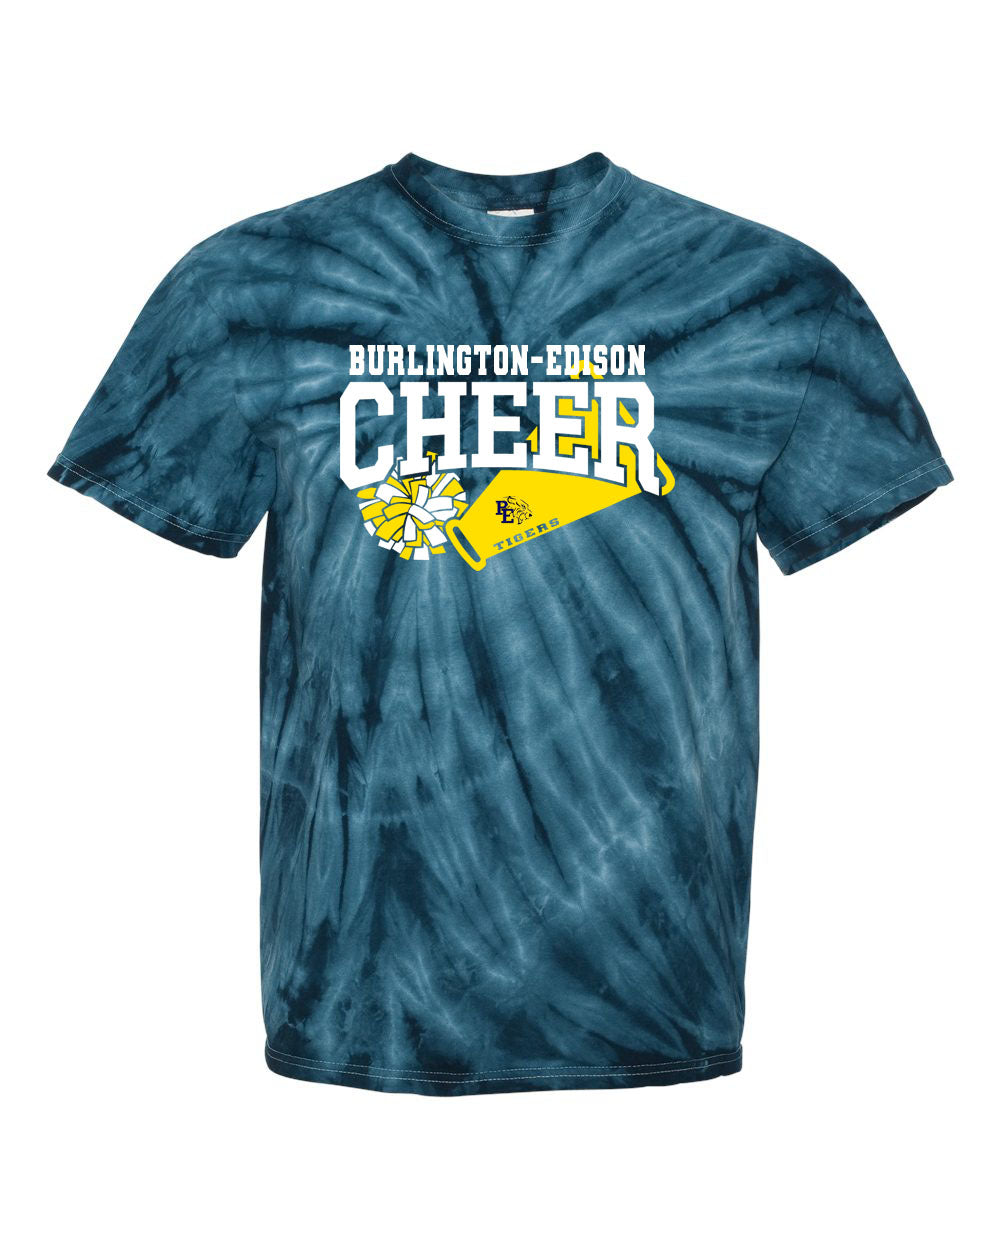 Burlington Edison Cheer Tie Dye t-shirt Design 2